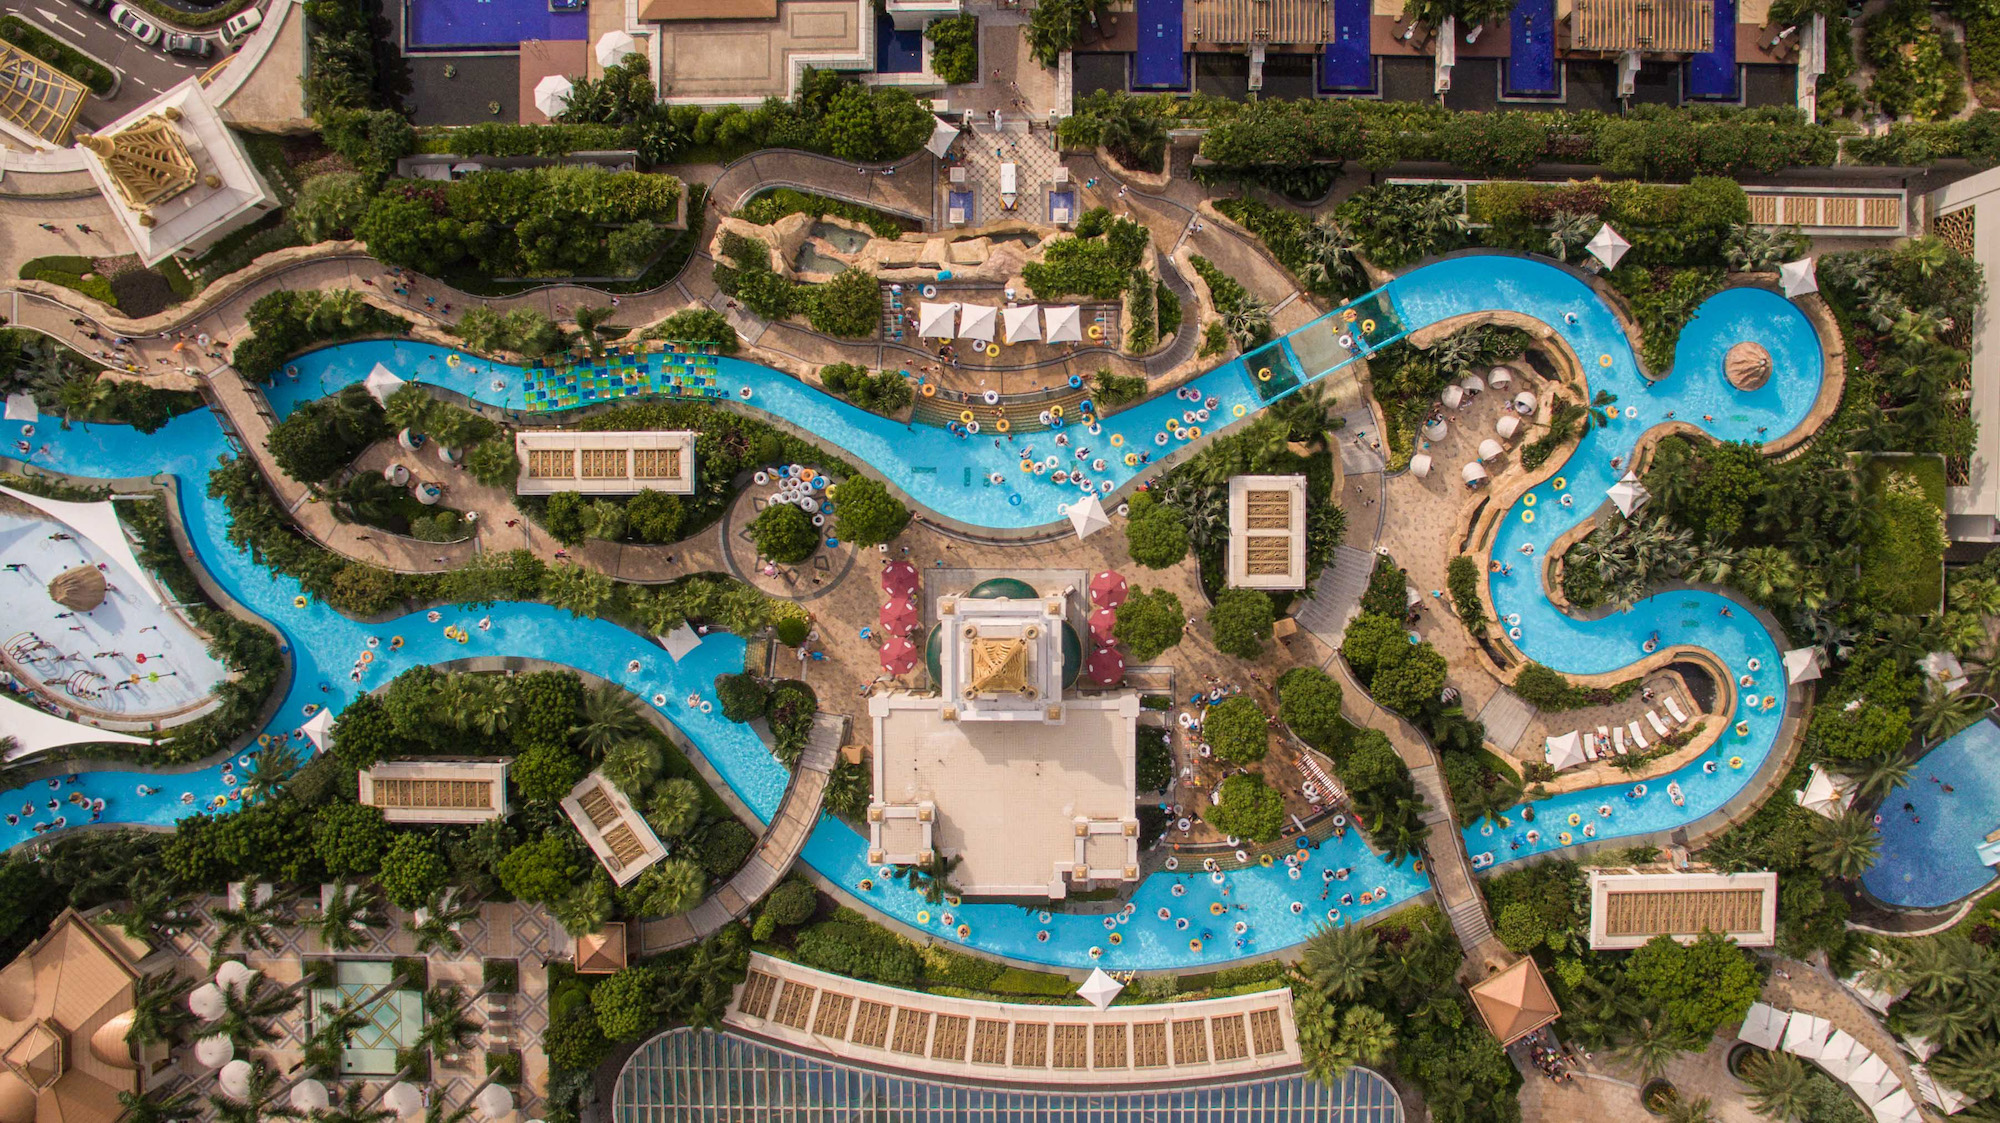 Swimming Pool Galaxy Macau from Above july events macau